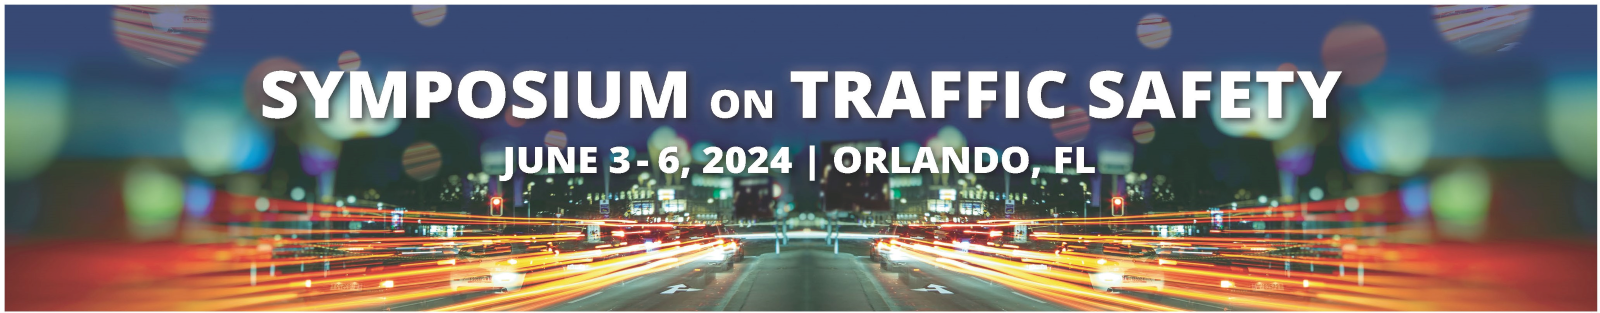 IPTM's Symposium on Traffic Safety, June 3-6, 2024, Orlando, Florida